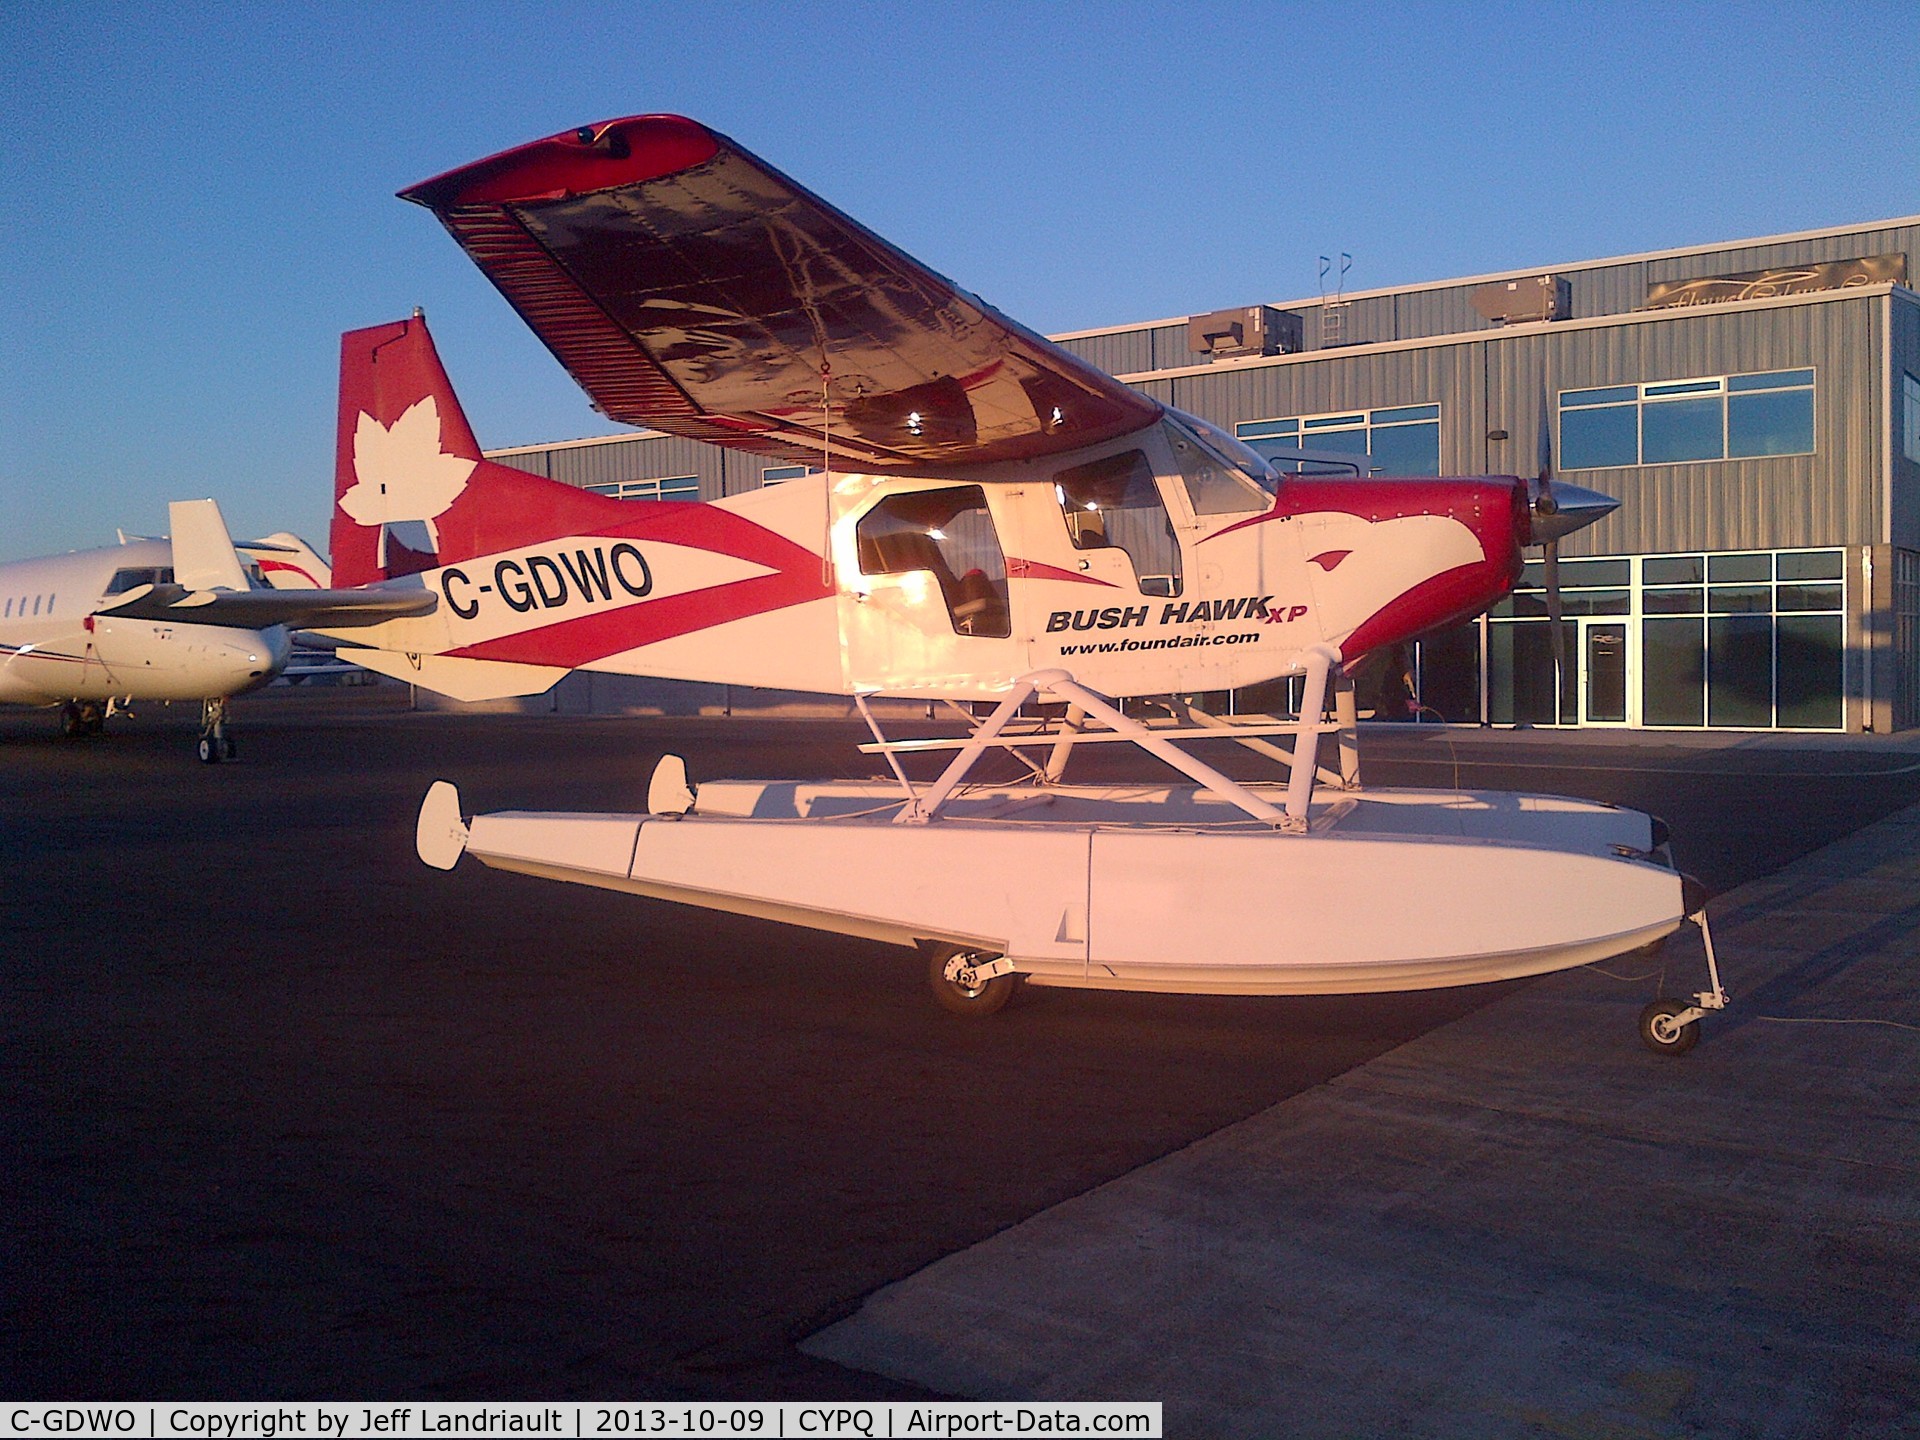 C-GDWO, 1998 Found FBA-2C1 C/N 28, GDWO on Amphibs Aerocet 3400